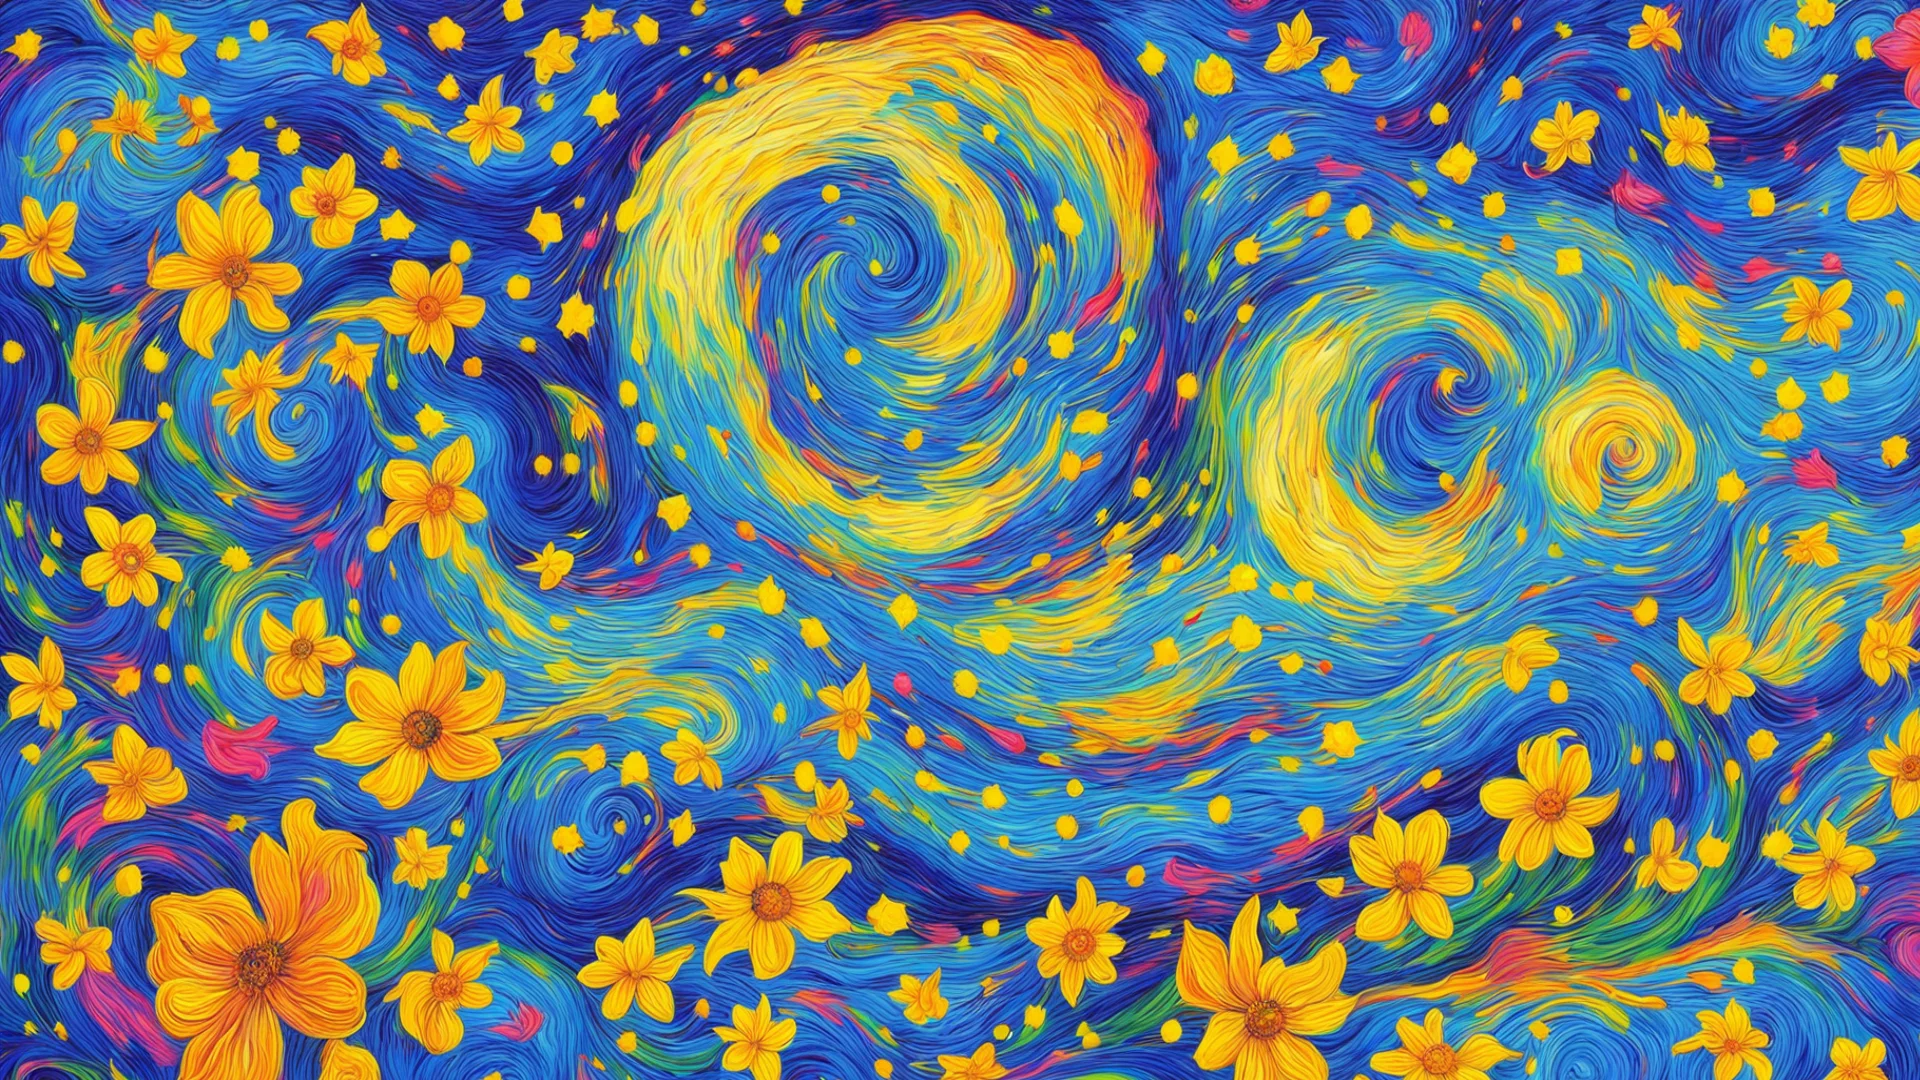 artstation art starry night van gogh beautiful colors swirl flowers confident engaging wow 3 wide